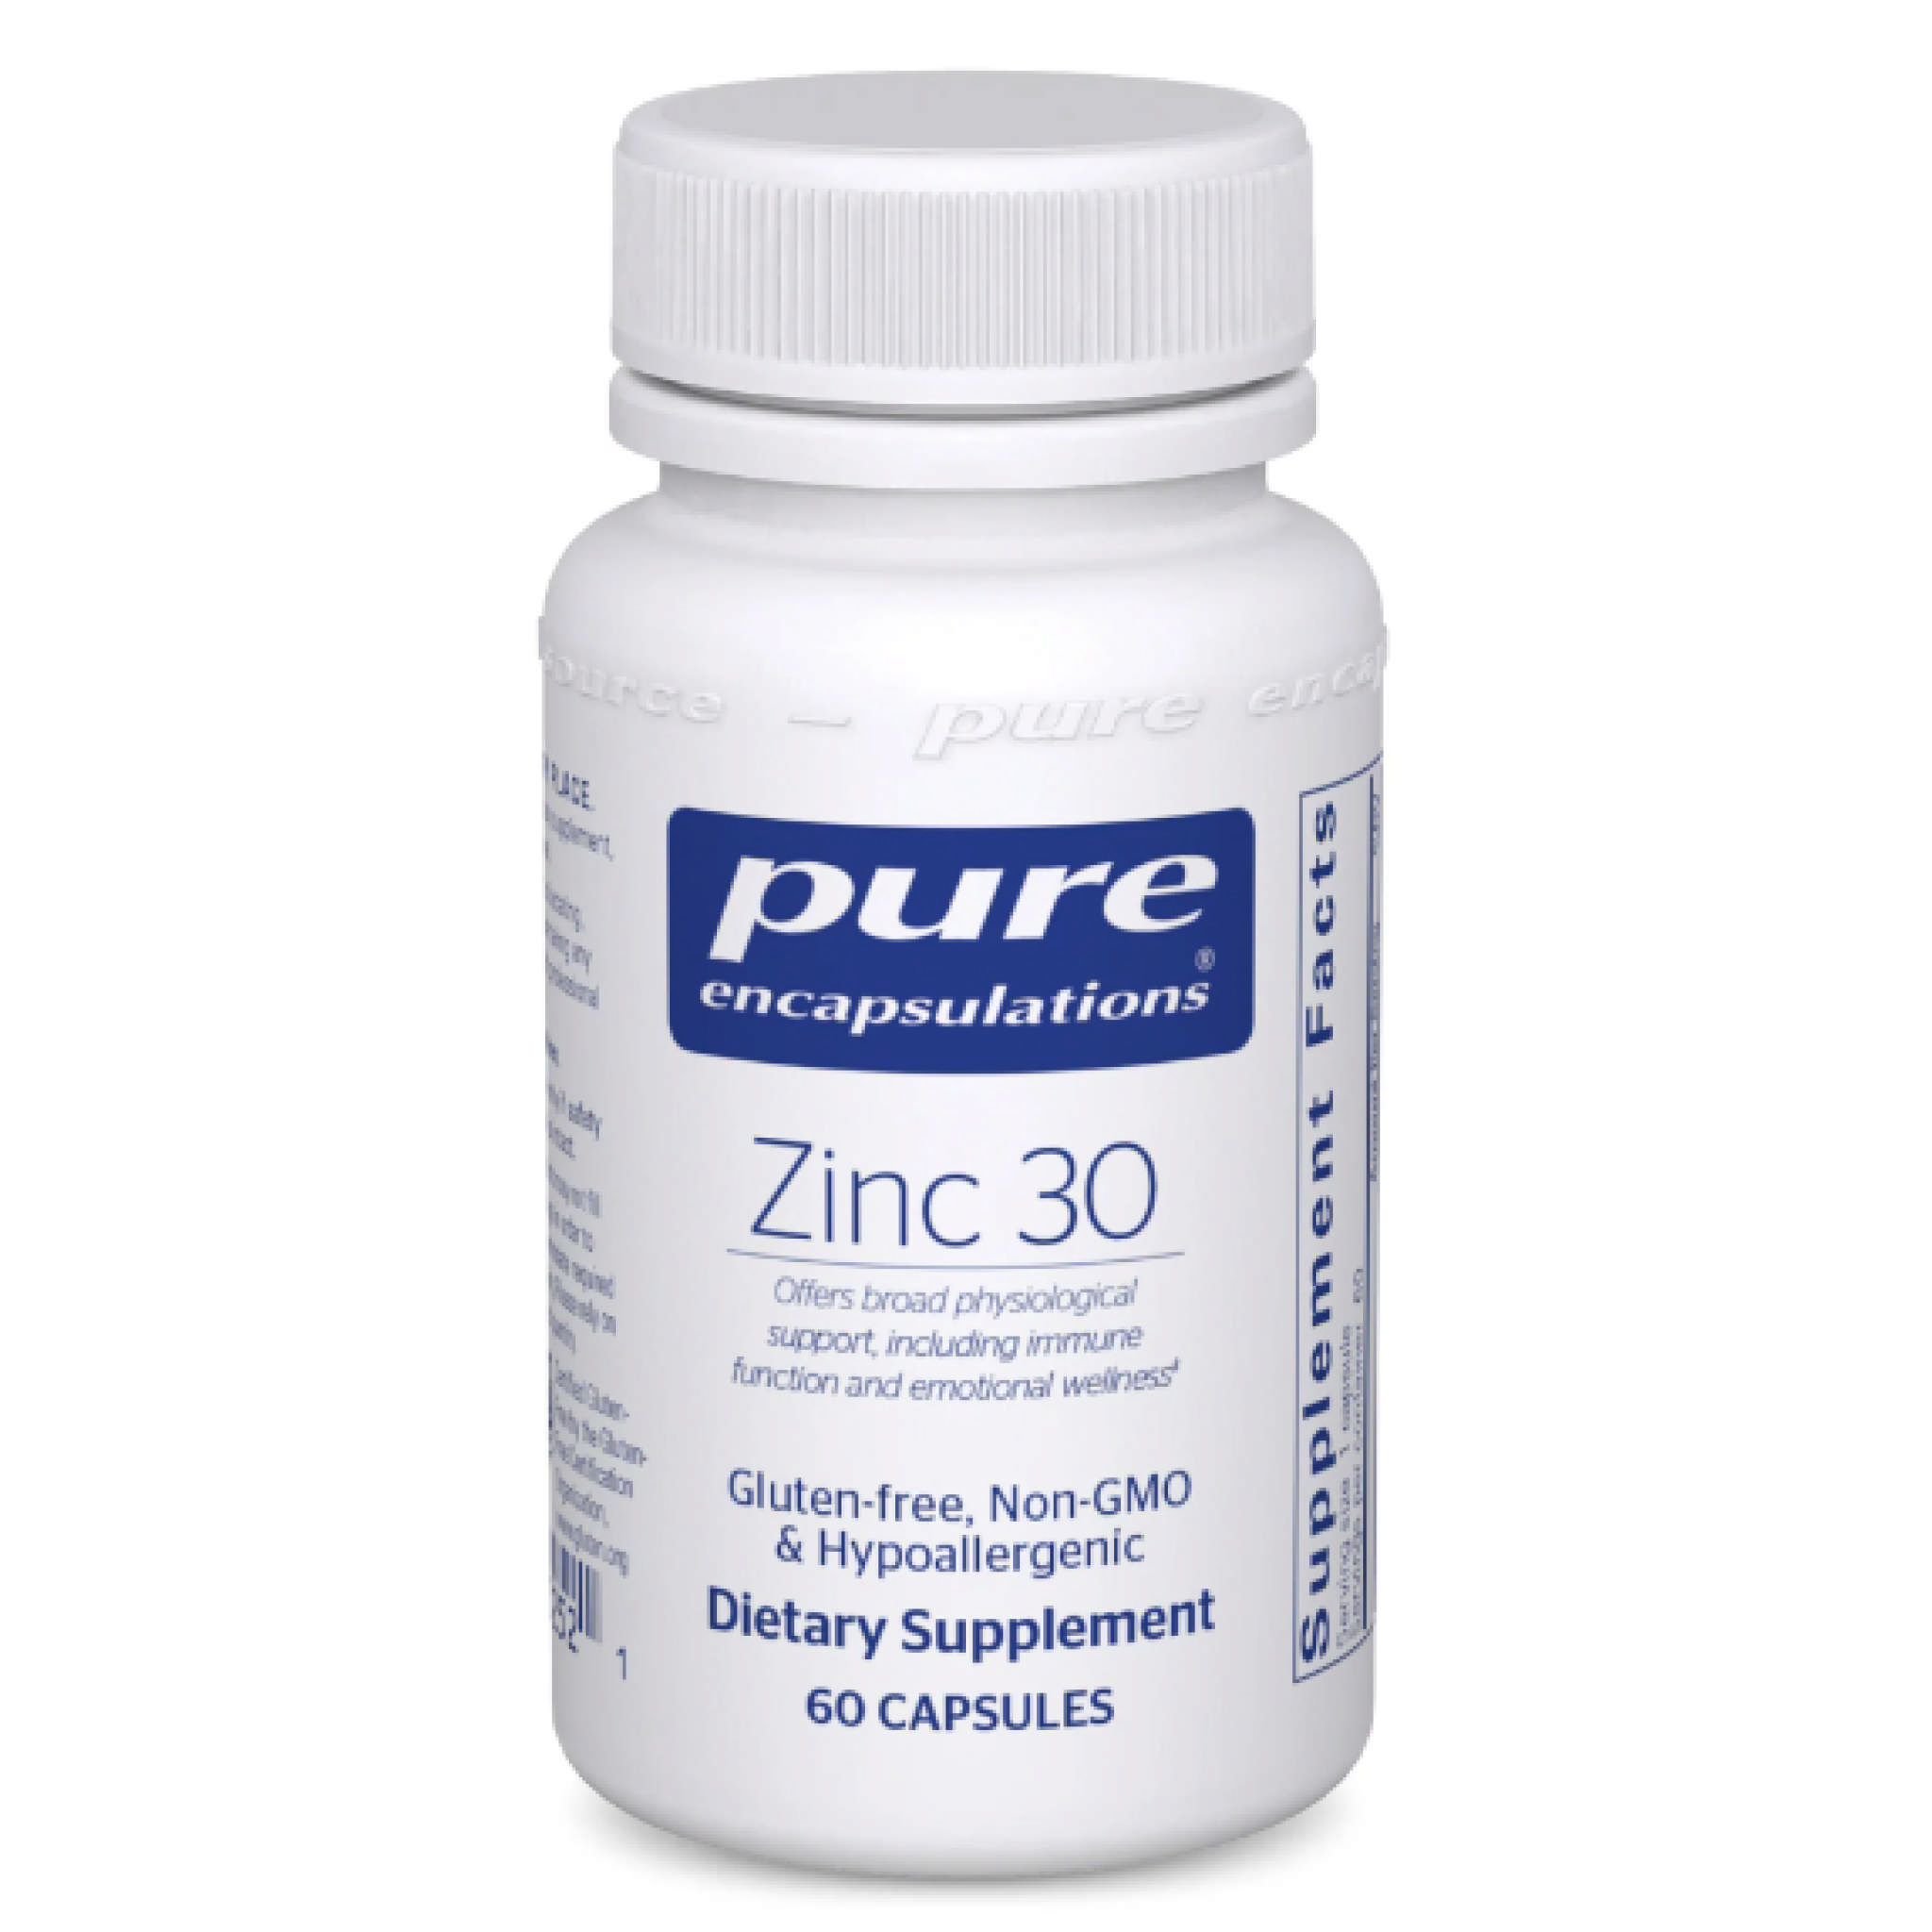 Pure Encapsulations - Zinc 30 Picolinate